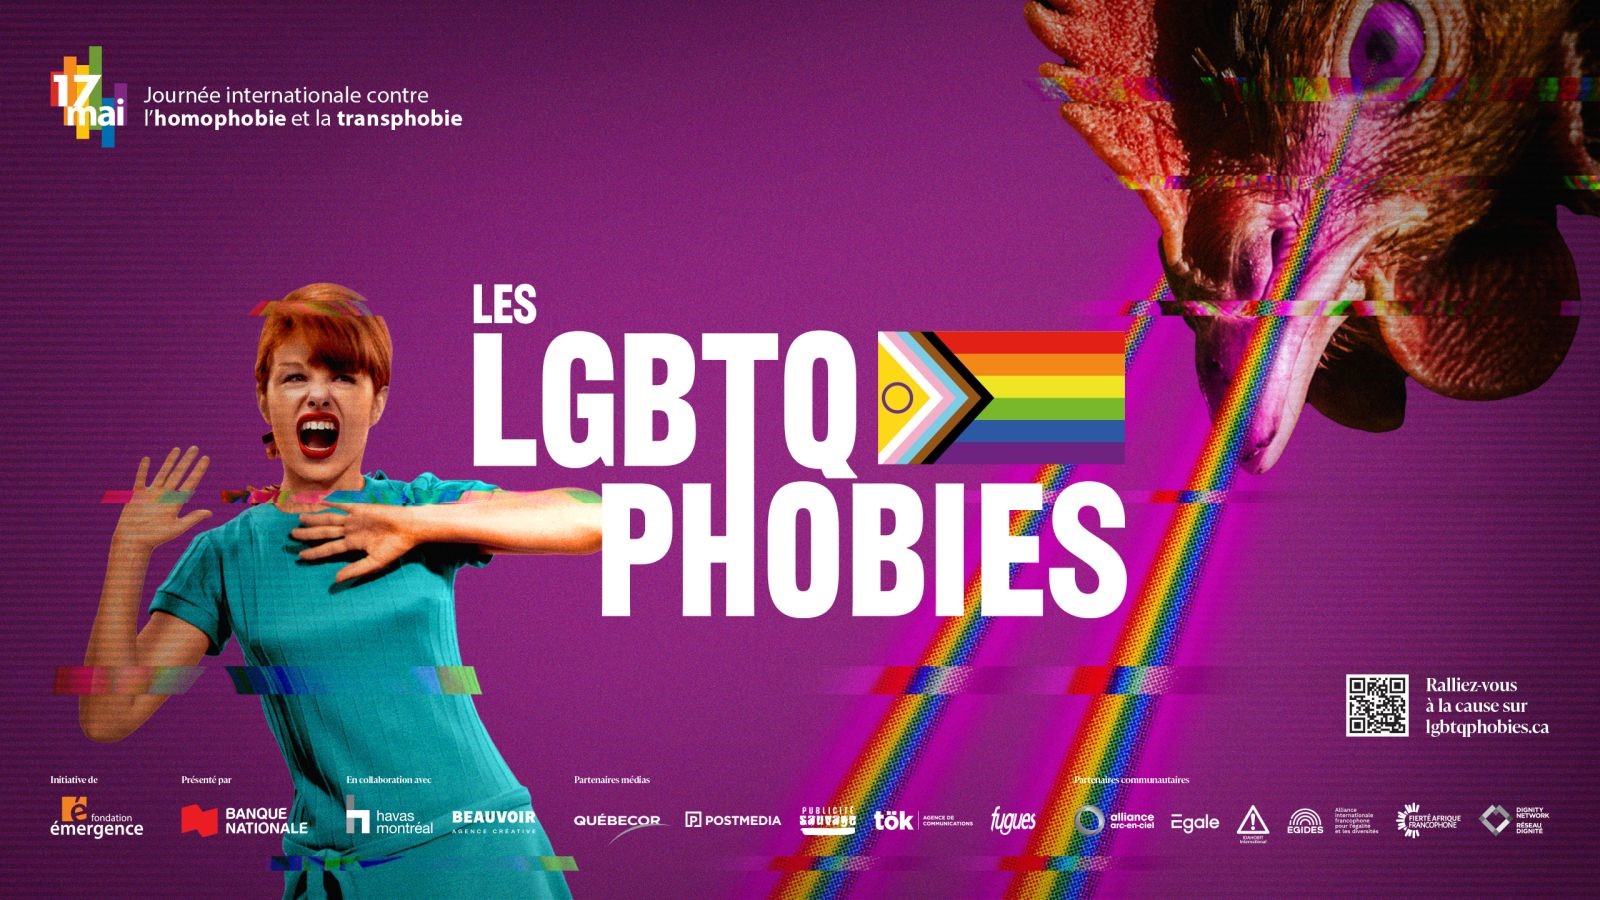  17 de Mayo - Da Internacional contra la Homofobia, Transfobia y Bifobia / May 17 - International Day Against Homophobia, Transphobia and Biphobia 